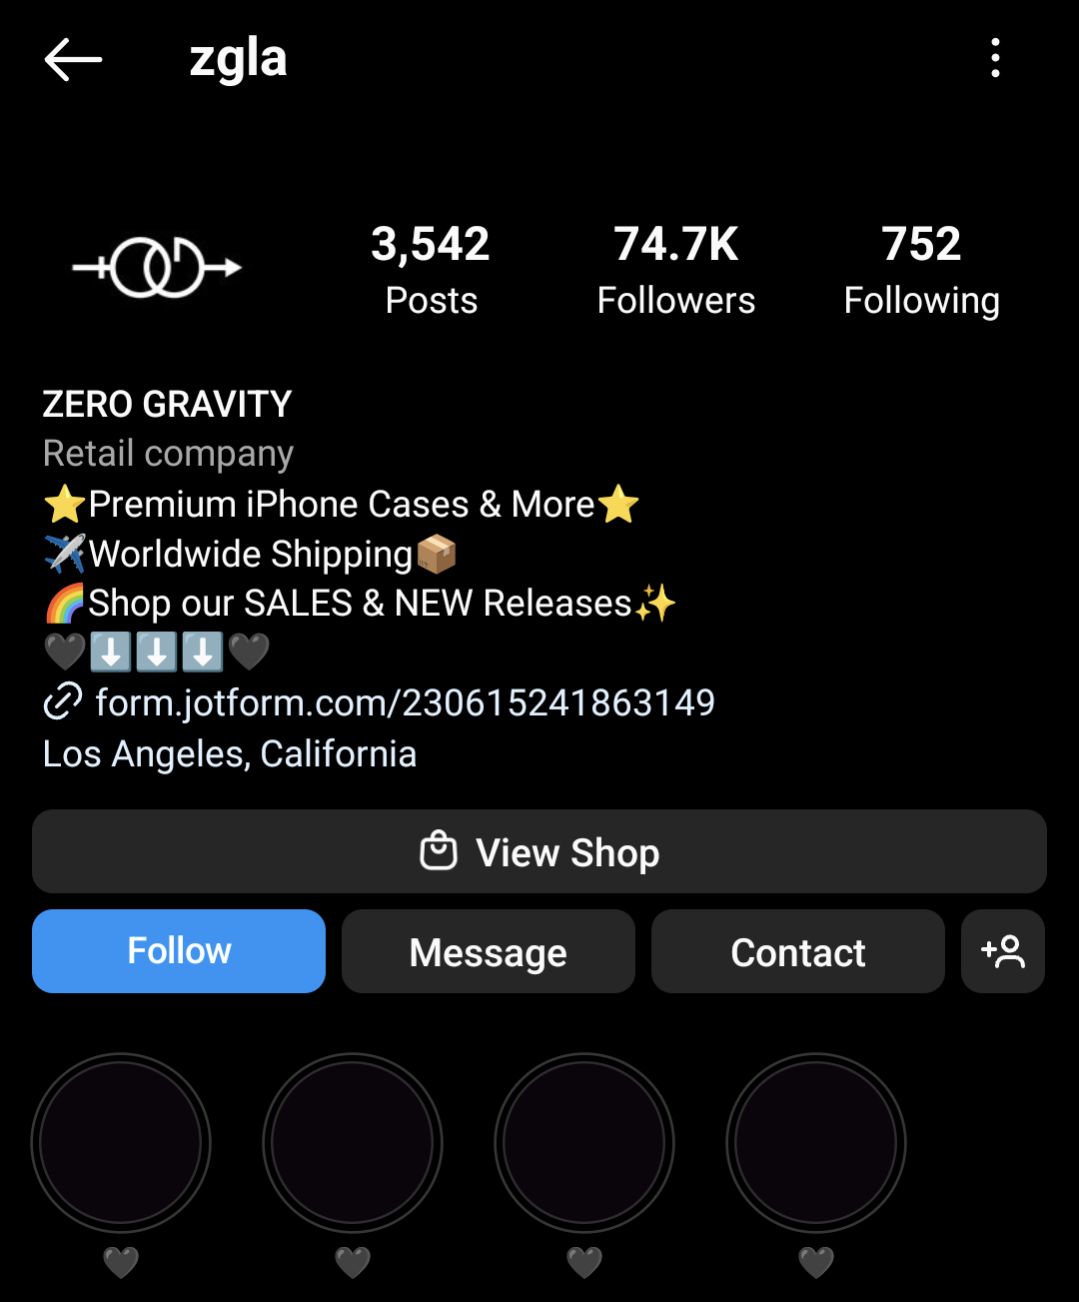 Zero Gravity uses a lot of emojis in its Instagram bio